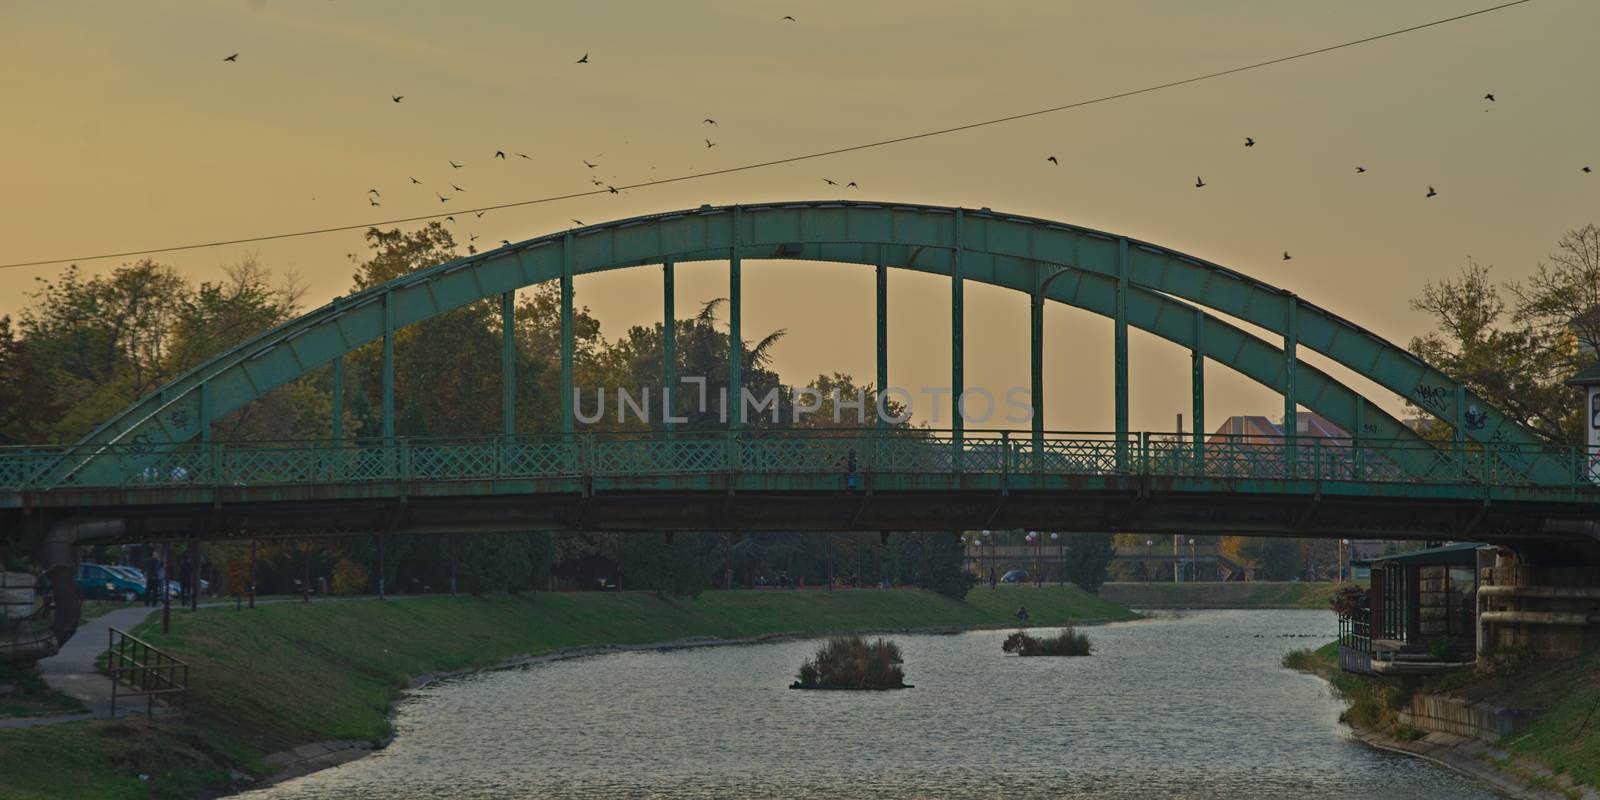 Steel bridge that crosses Begej river in Zrenjanin, Serbia